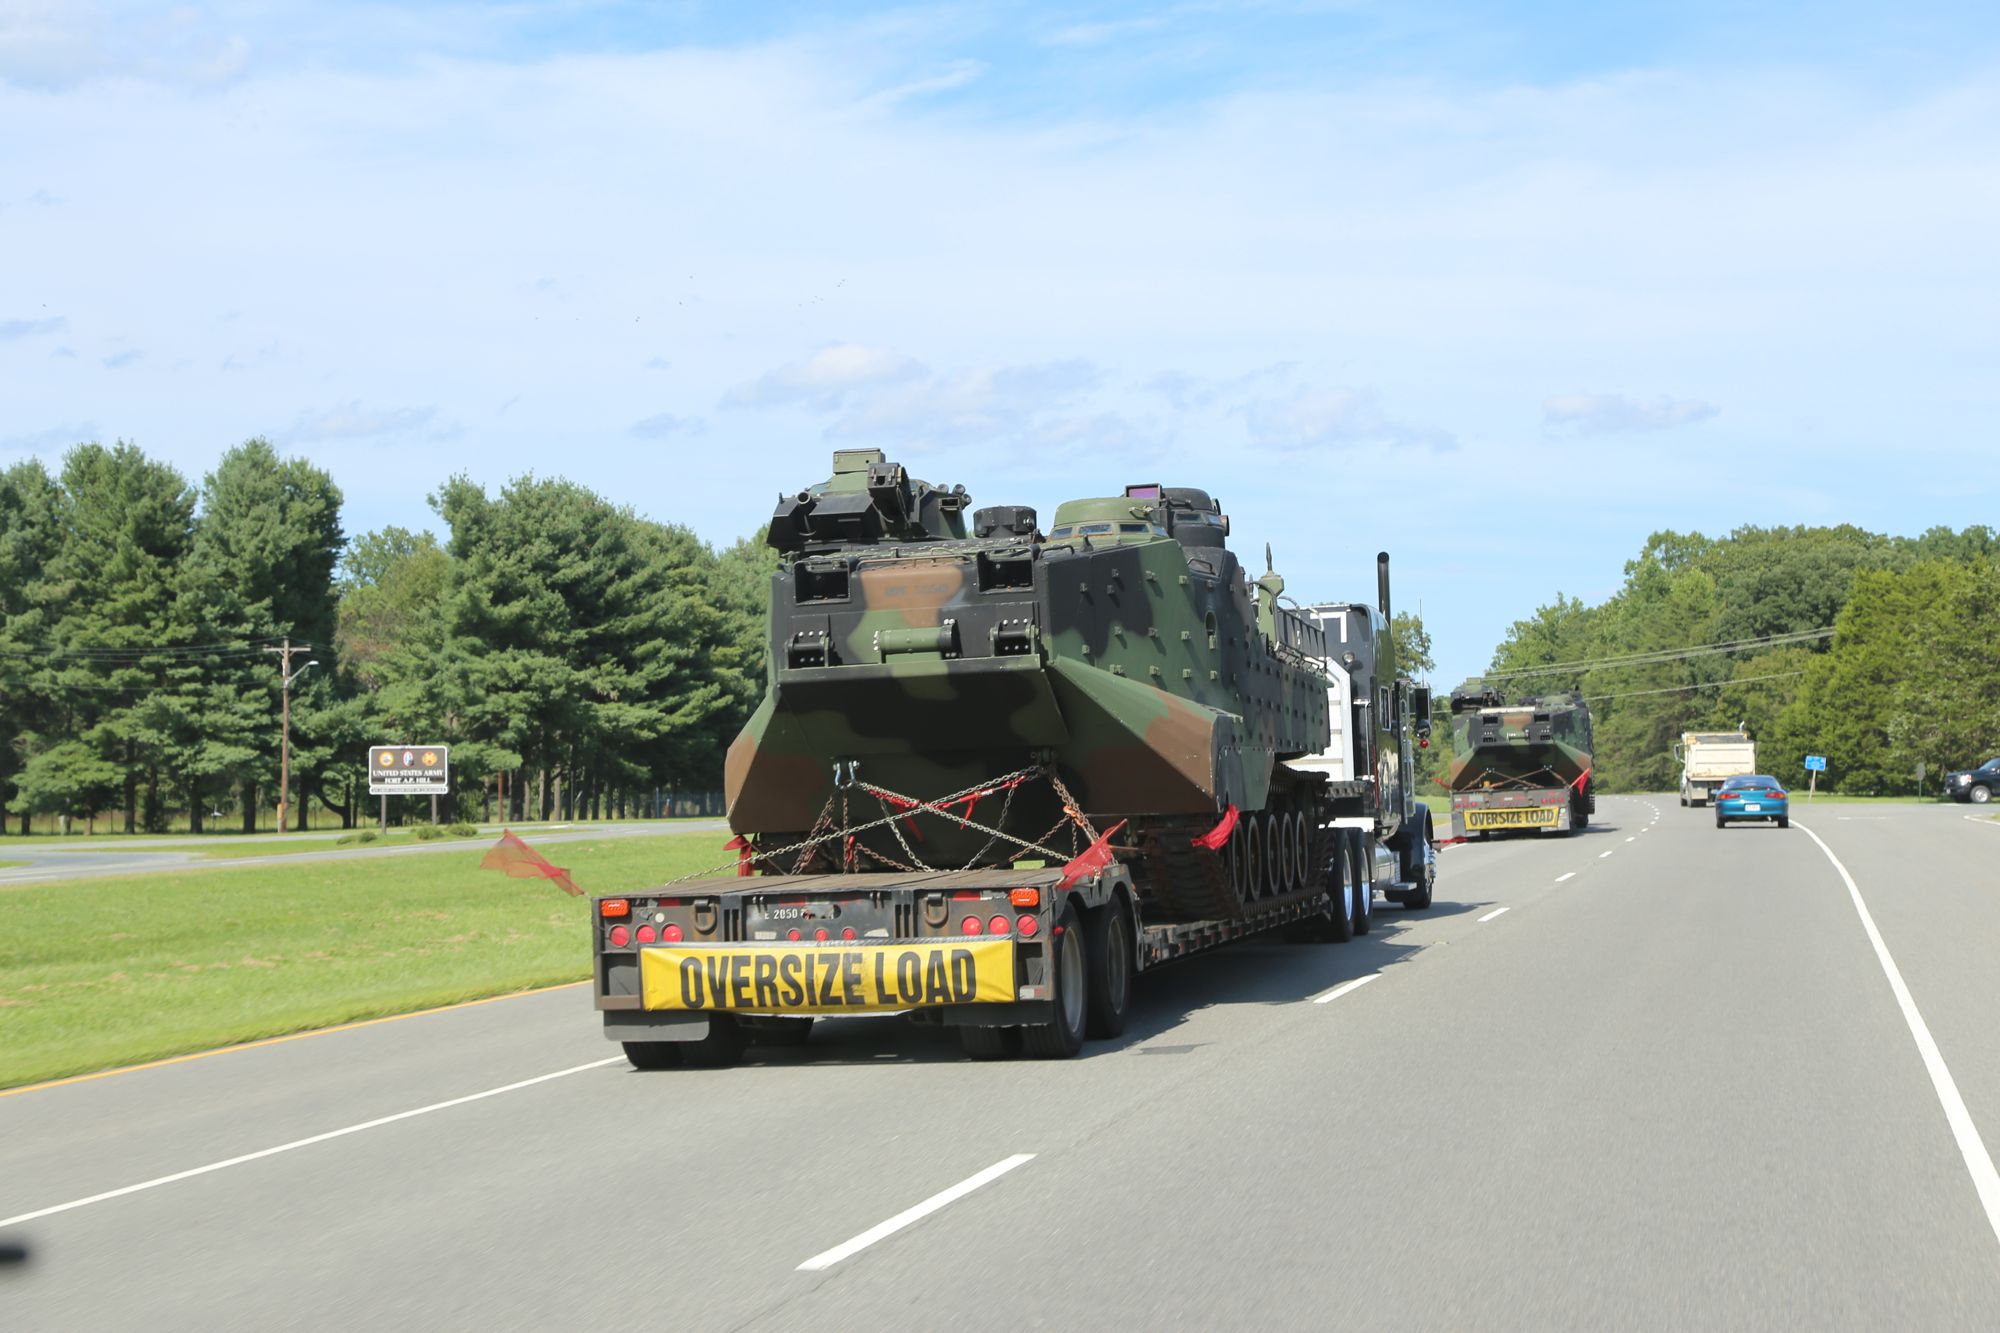 Tanks rolling into Washington DC